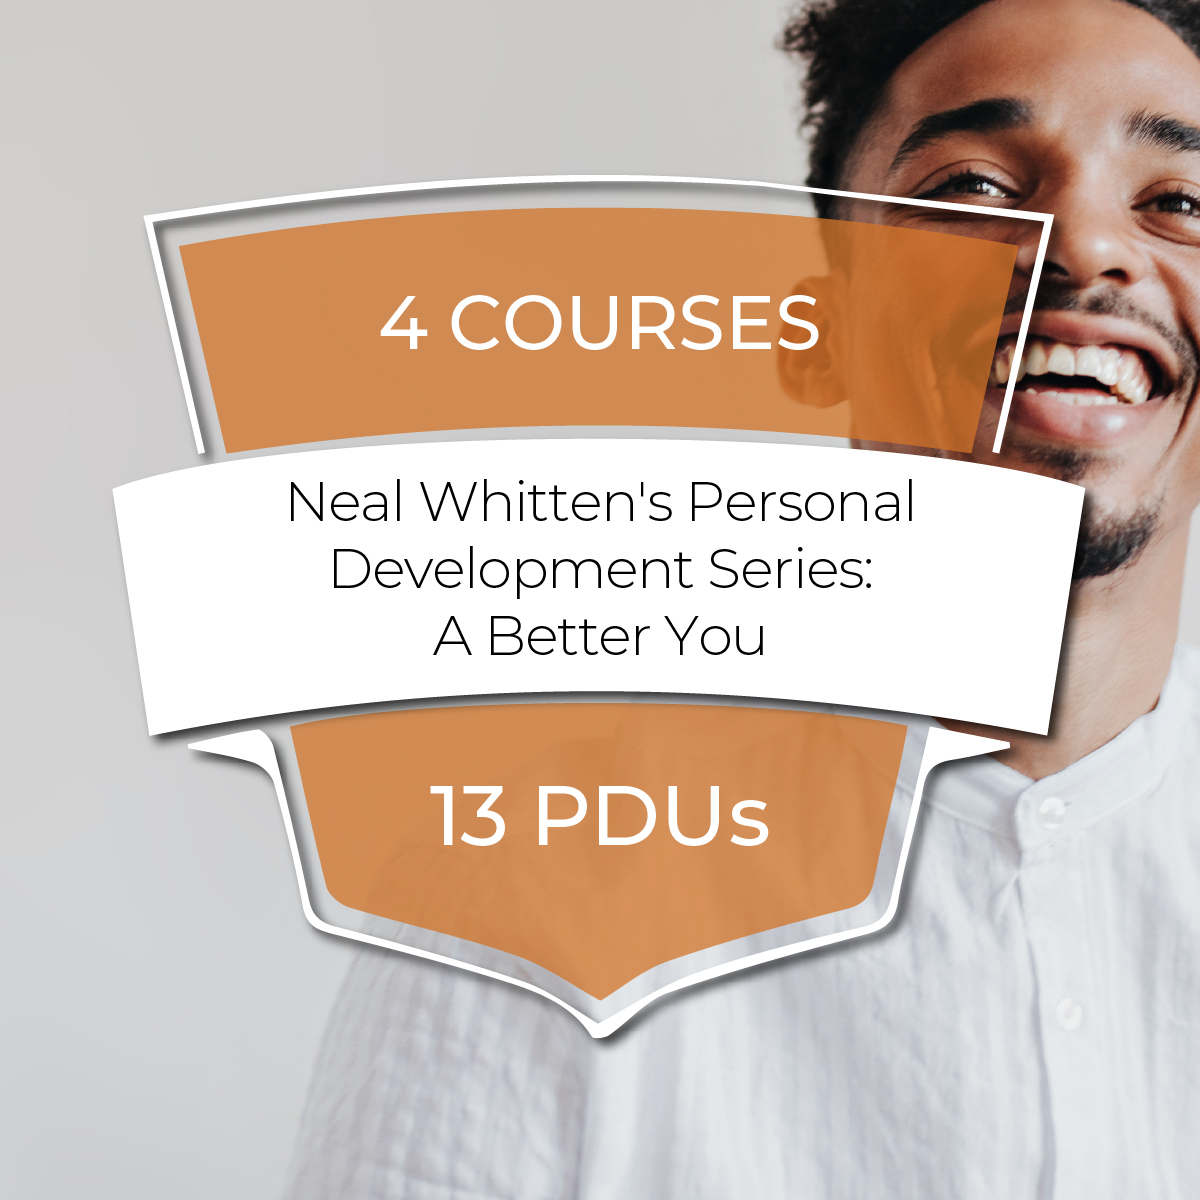 Neal Whitten's Personal Development Series: A Better You